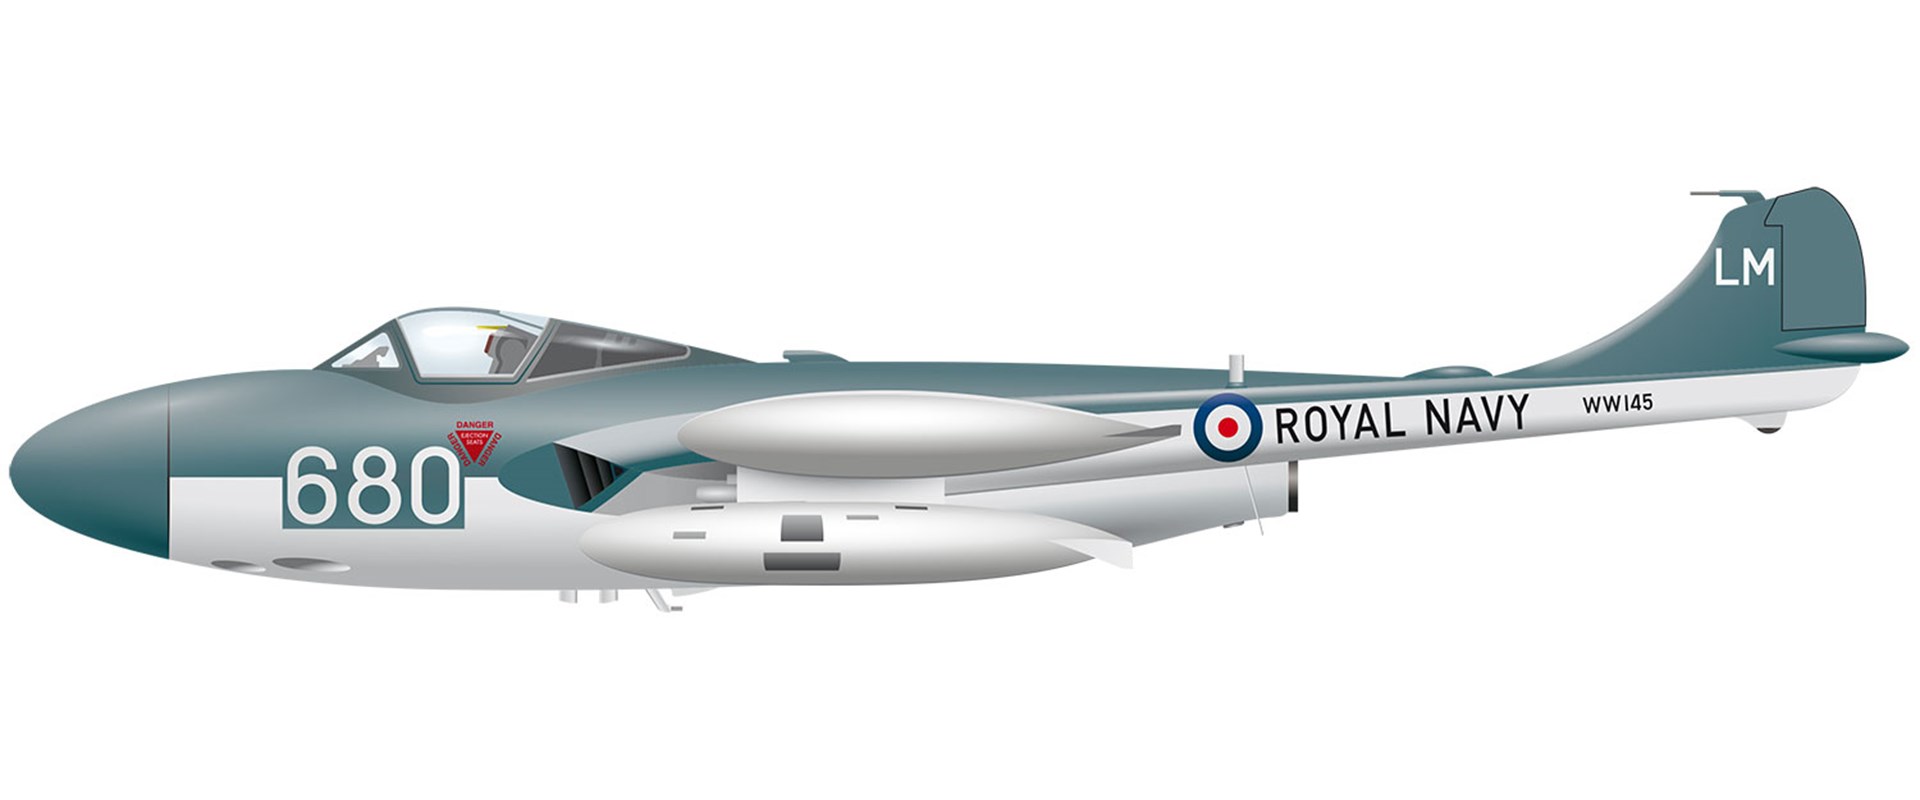 A grey de Havilland Sea Venom jet fighter aircraft. 